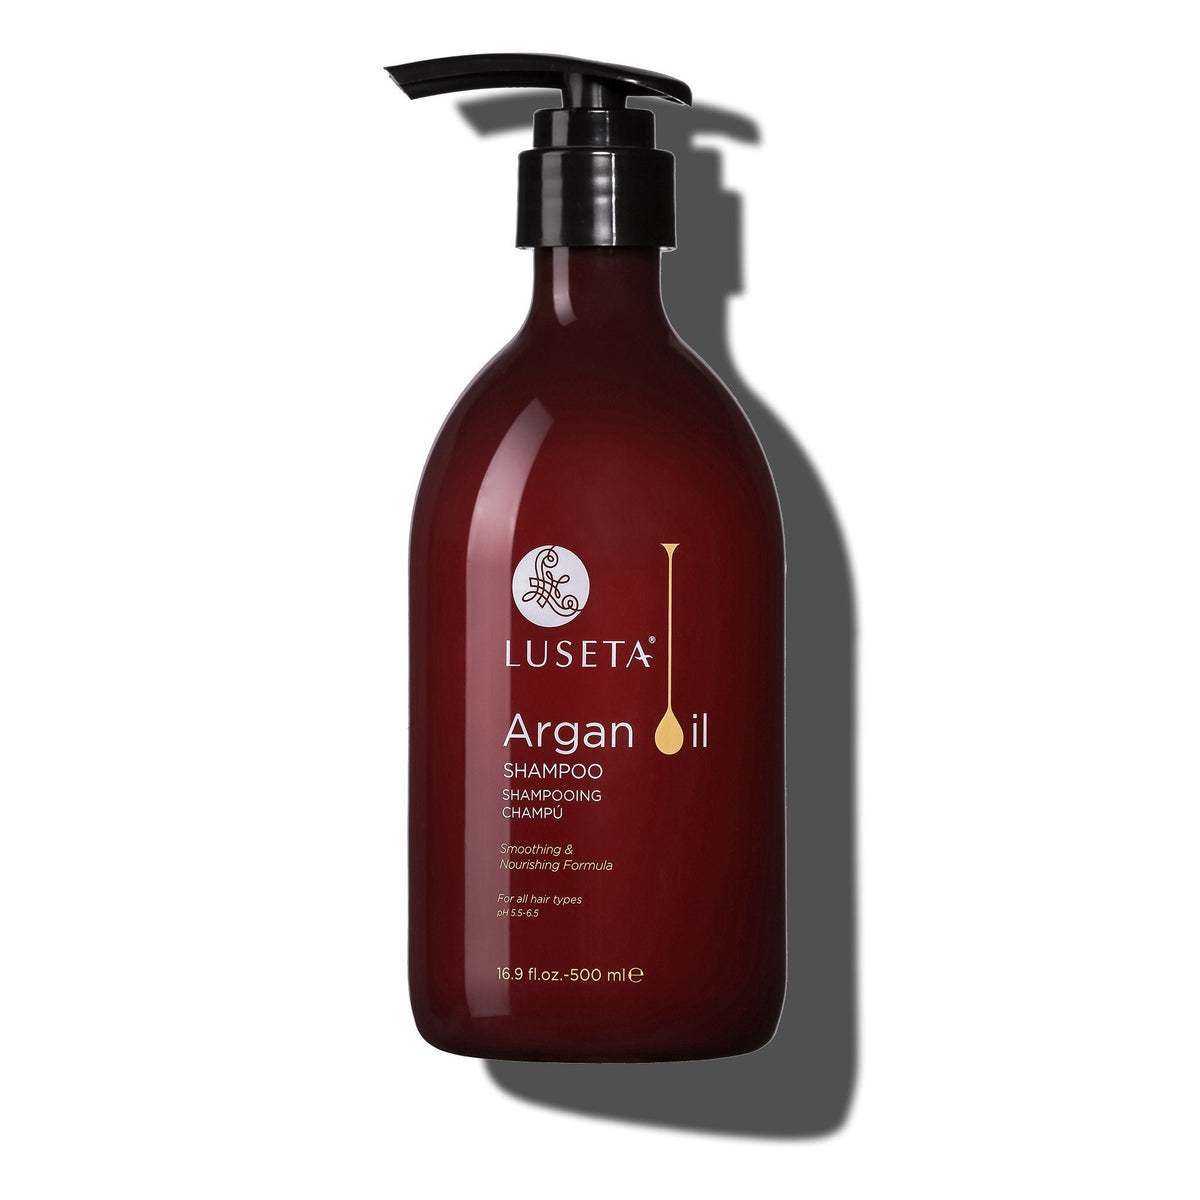 Argan Oil Shampoo - 16.9oz - by Luseta Beauty |ProCare Outlet|